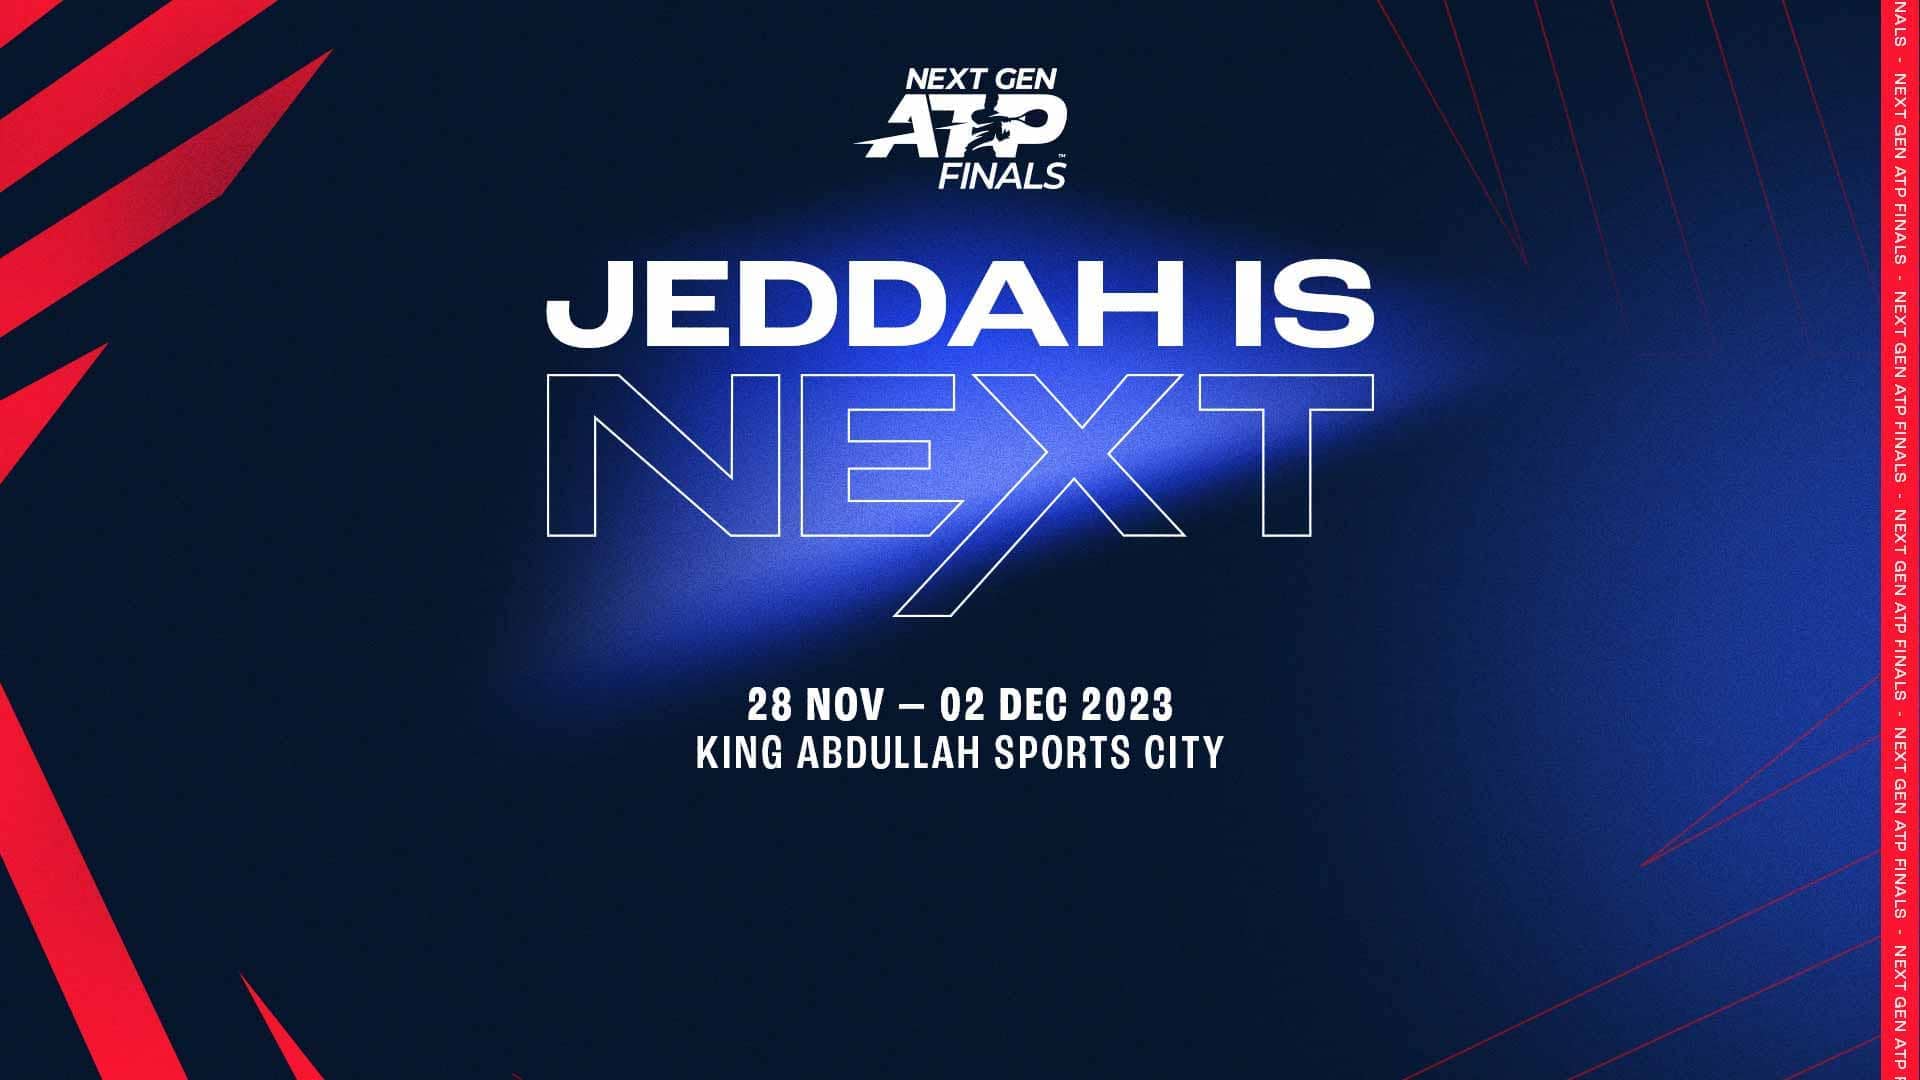 https://www.atptour.com/-/media/images/news/2023/08/23/16/57/jeddah-next-gen-atp-finals-2023-launch-graphic.jpg